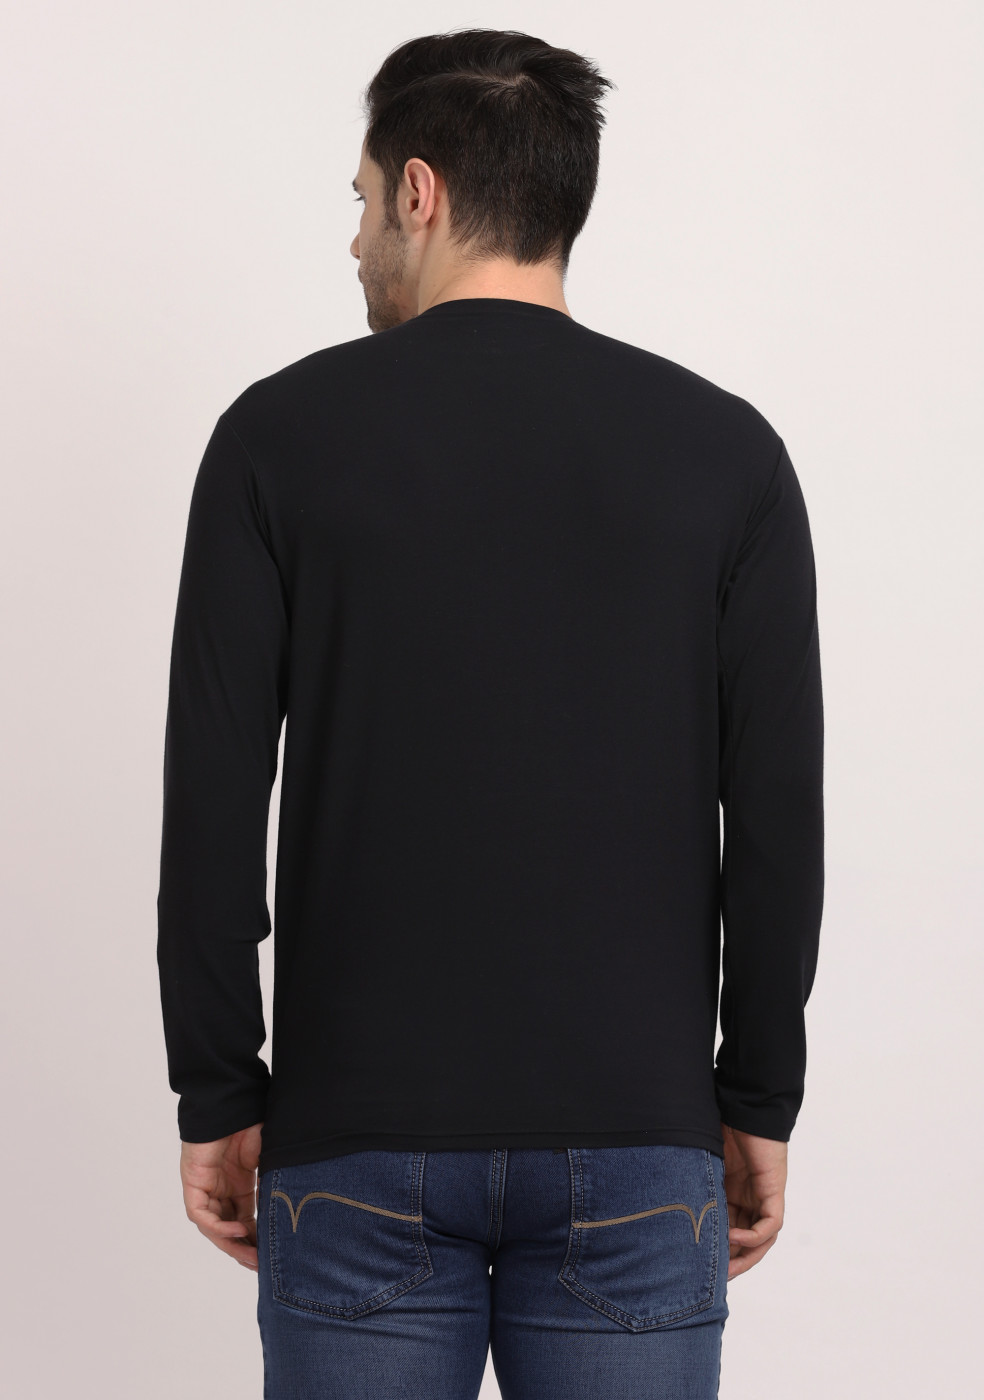 HUKH Full Sleeve Black Color Slim Fit Round Neck T Shirt Cotton Lycra Fabric for Men